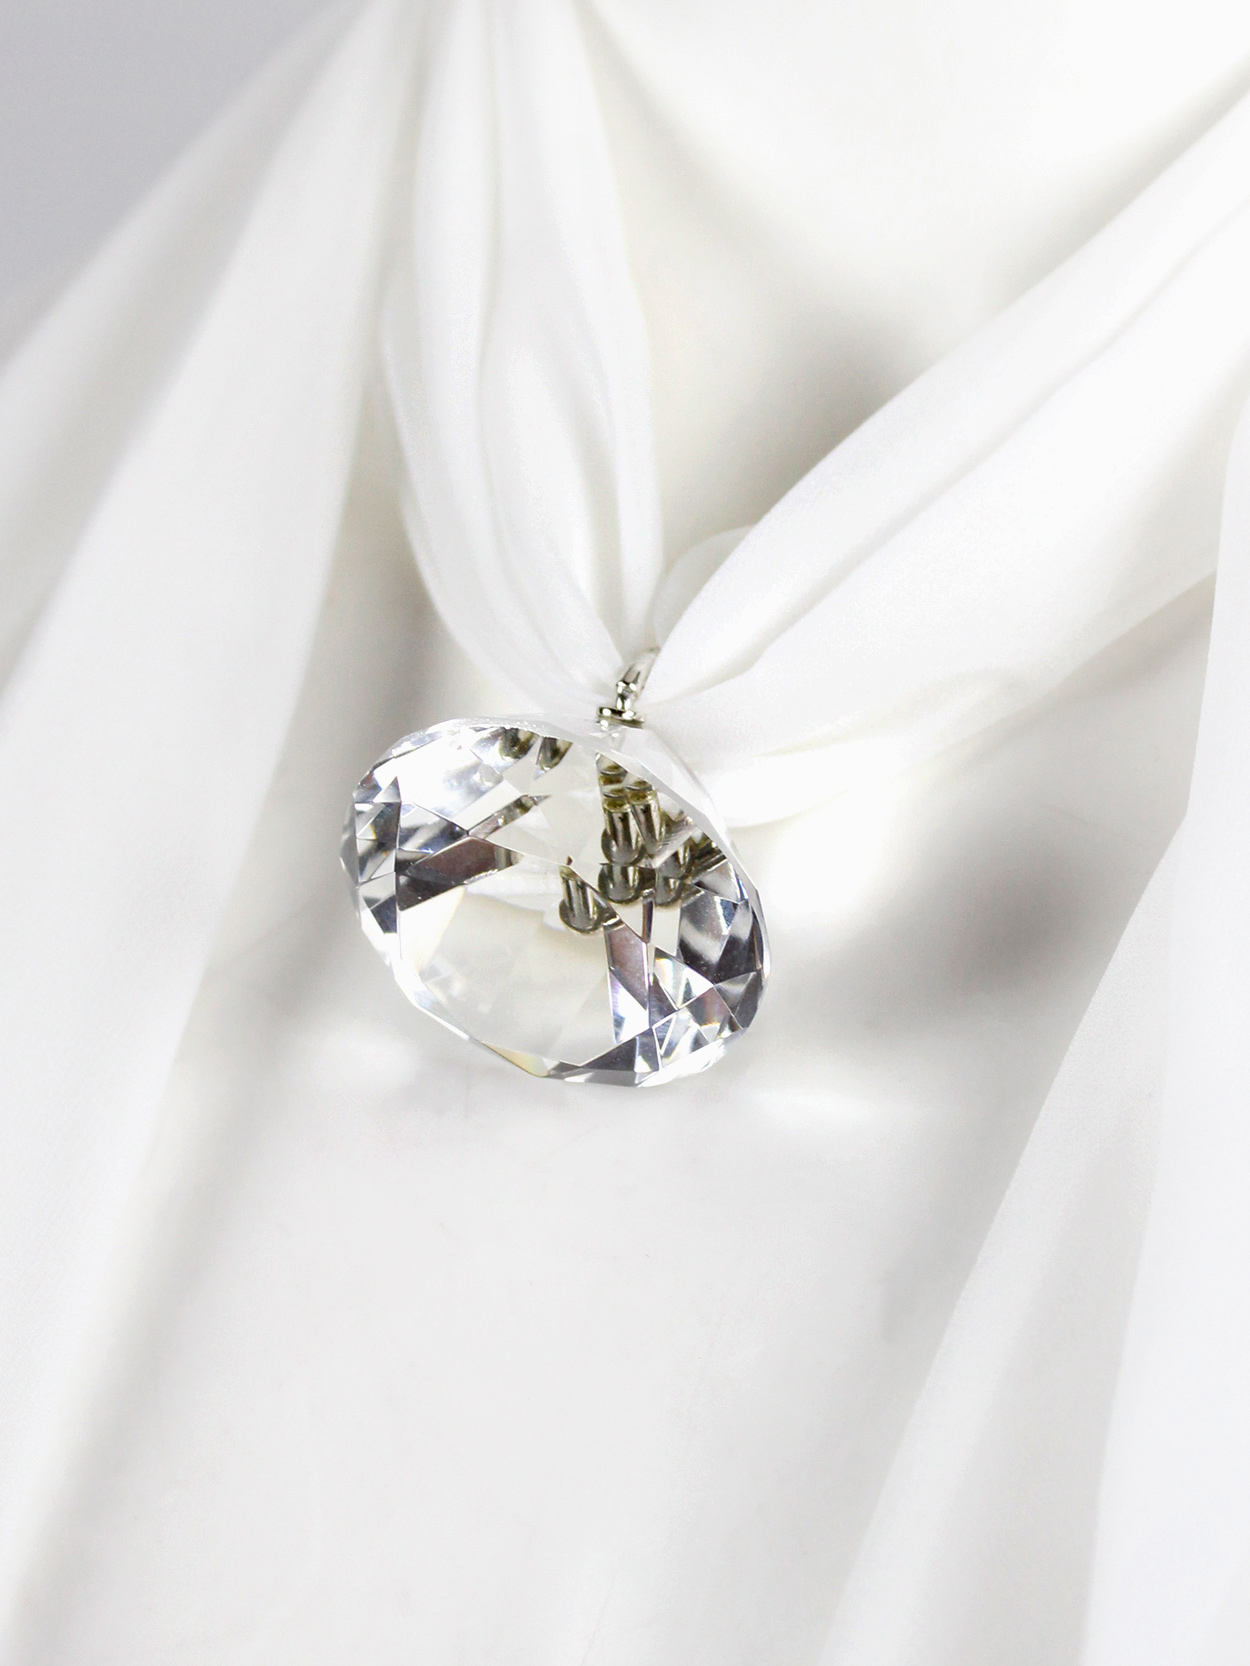 Maison Martin Margiela white scarf necklace with oversized diamond fall 2008 (11)